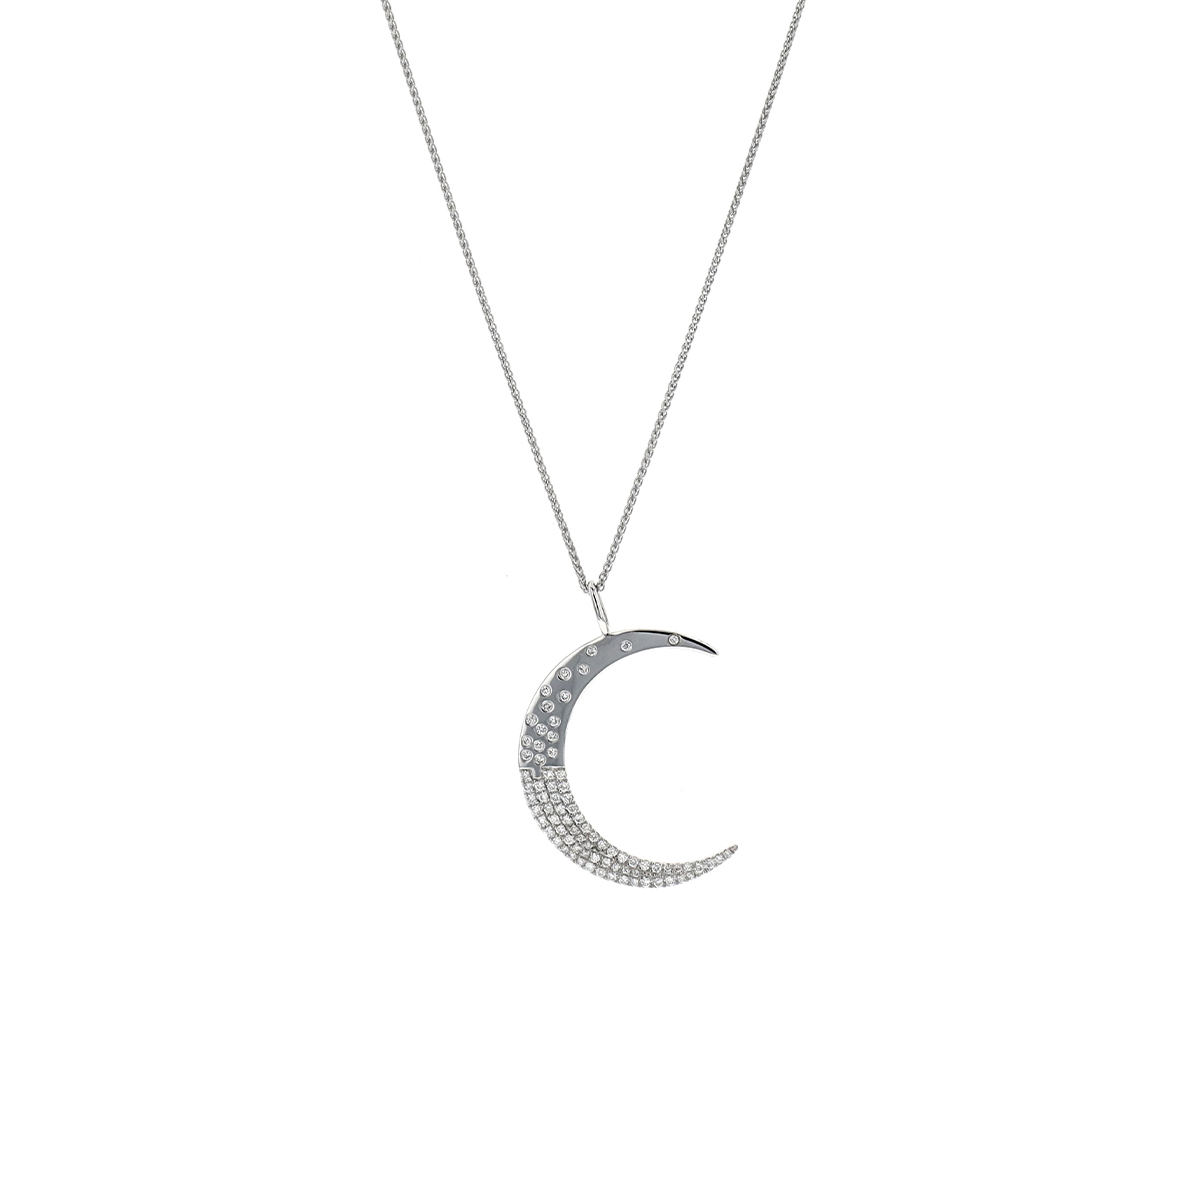 18K White Gold Diamond Crescent Moon Pendant with Chain